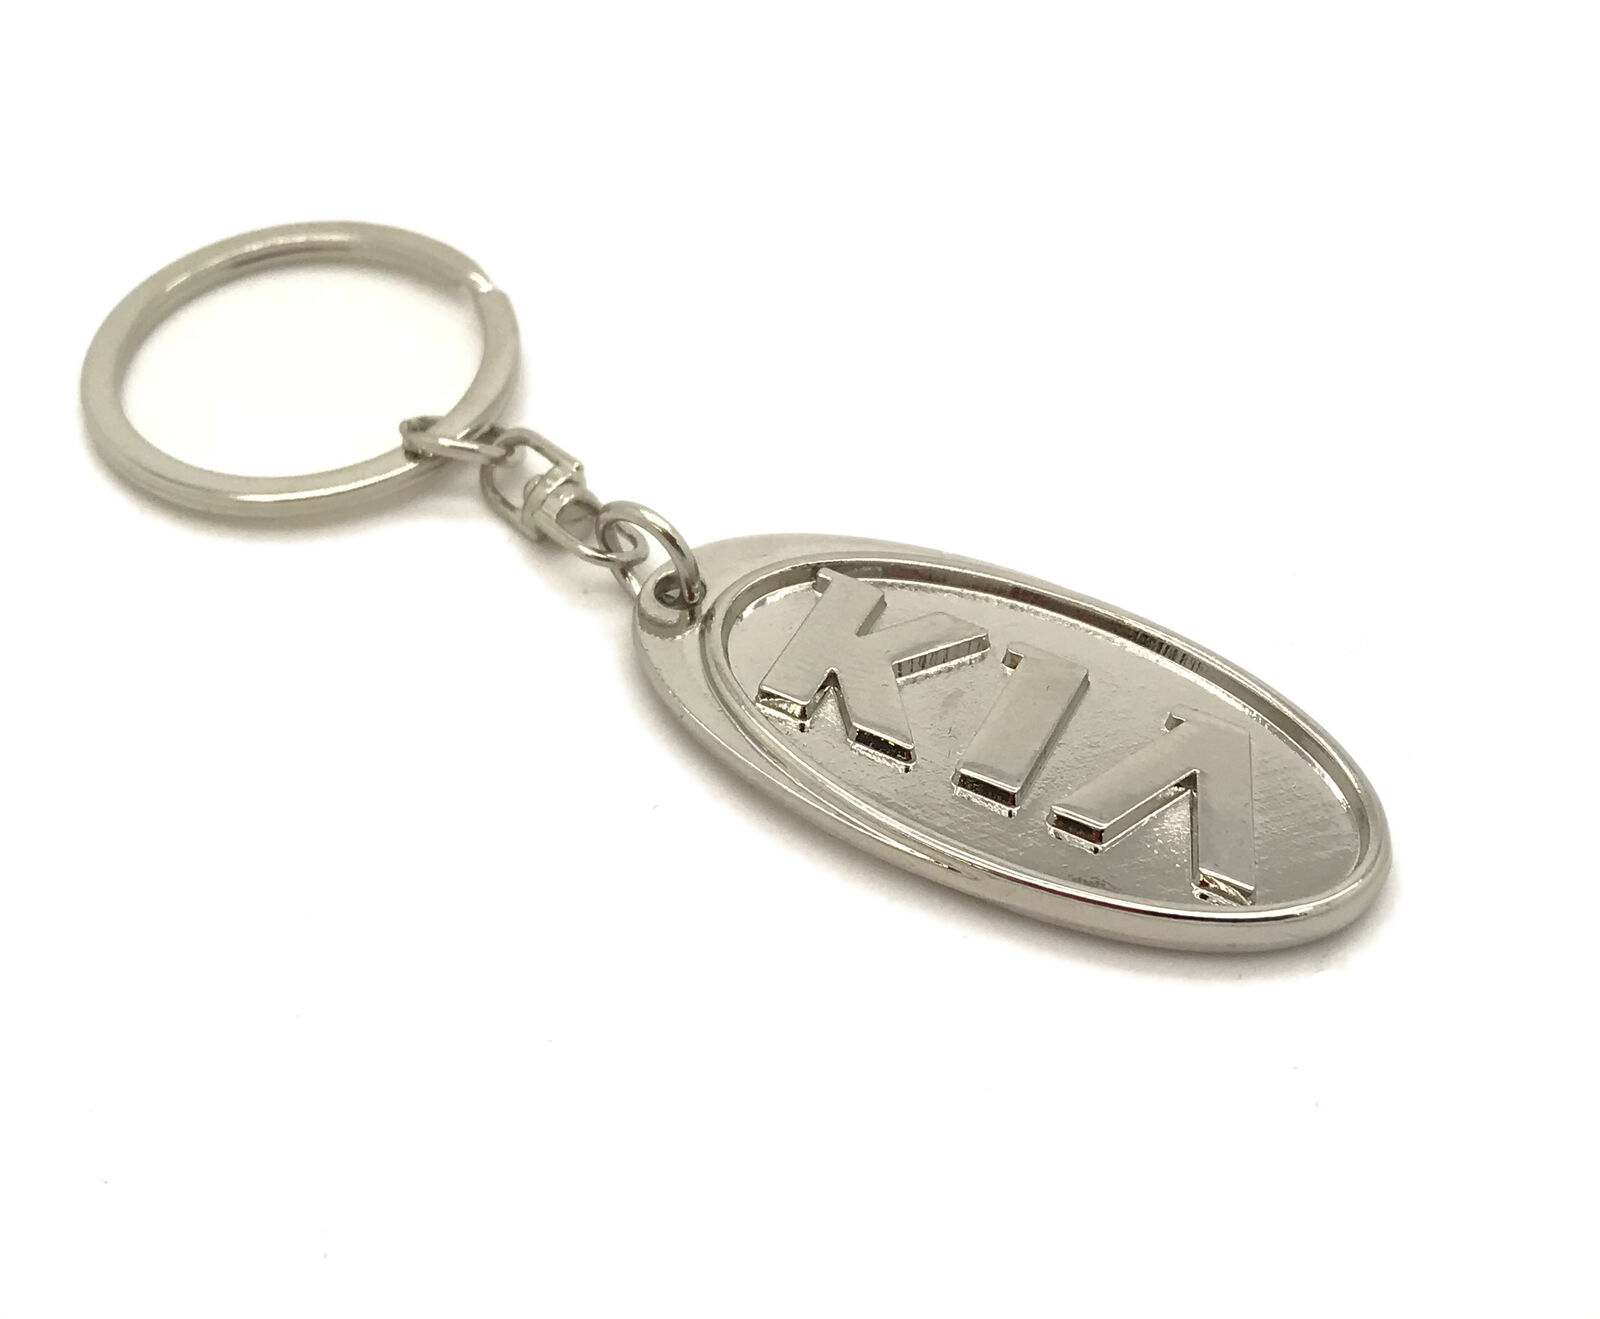 KIA Key ring Keyholder Chrome Logo emblem metal NEW key gift Auto